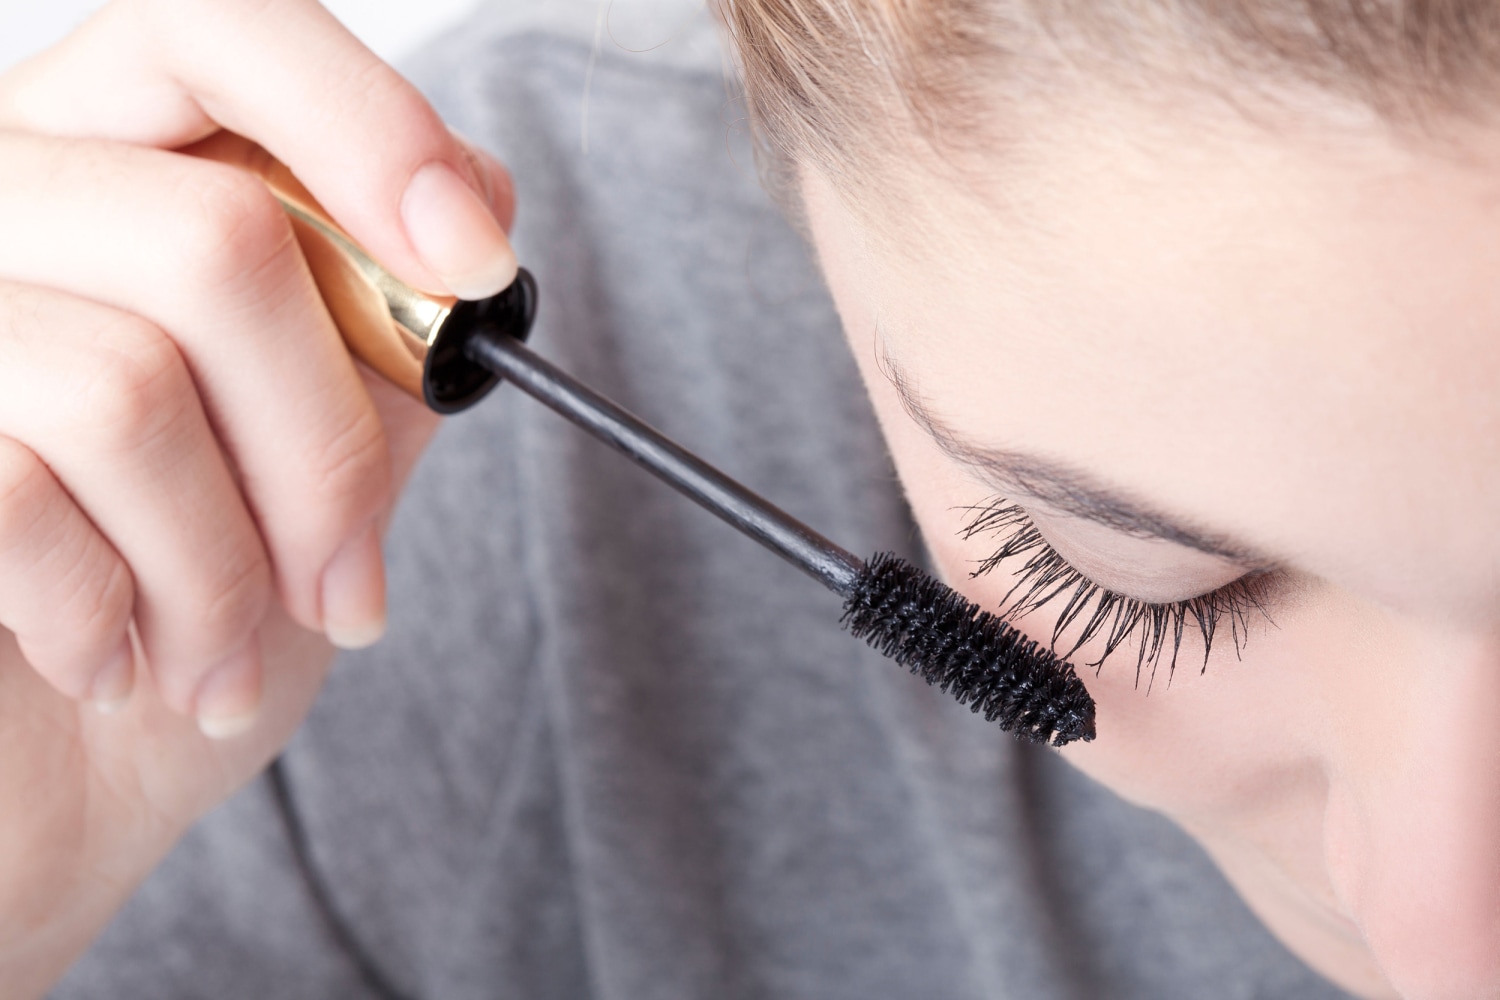 How to put mascara on, according to makeup